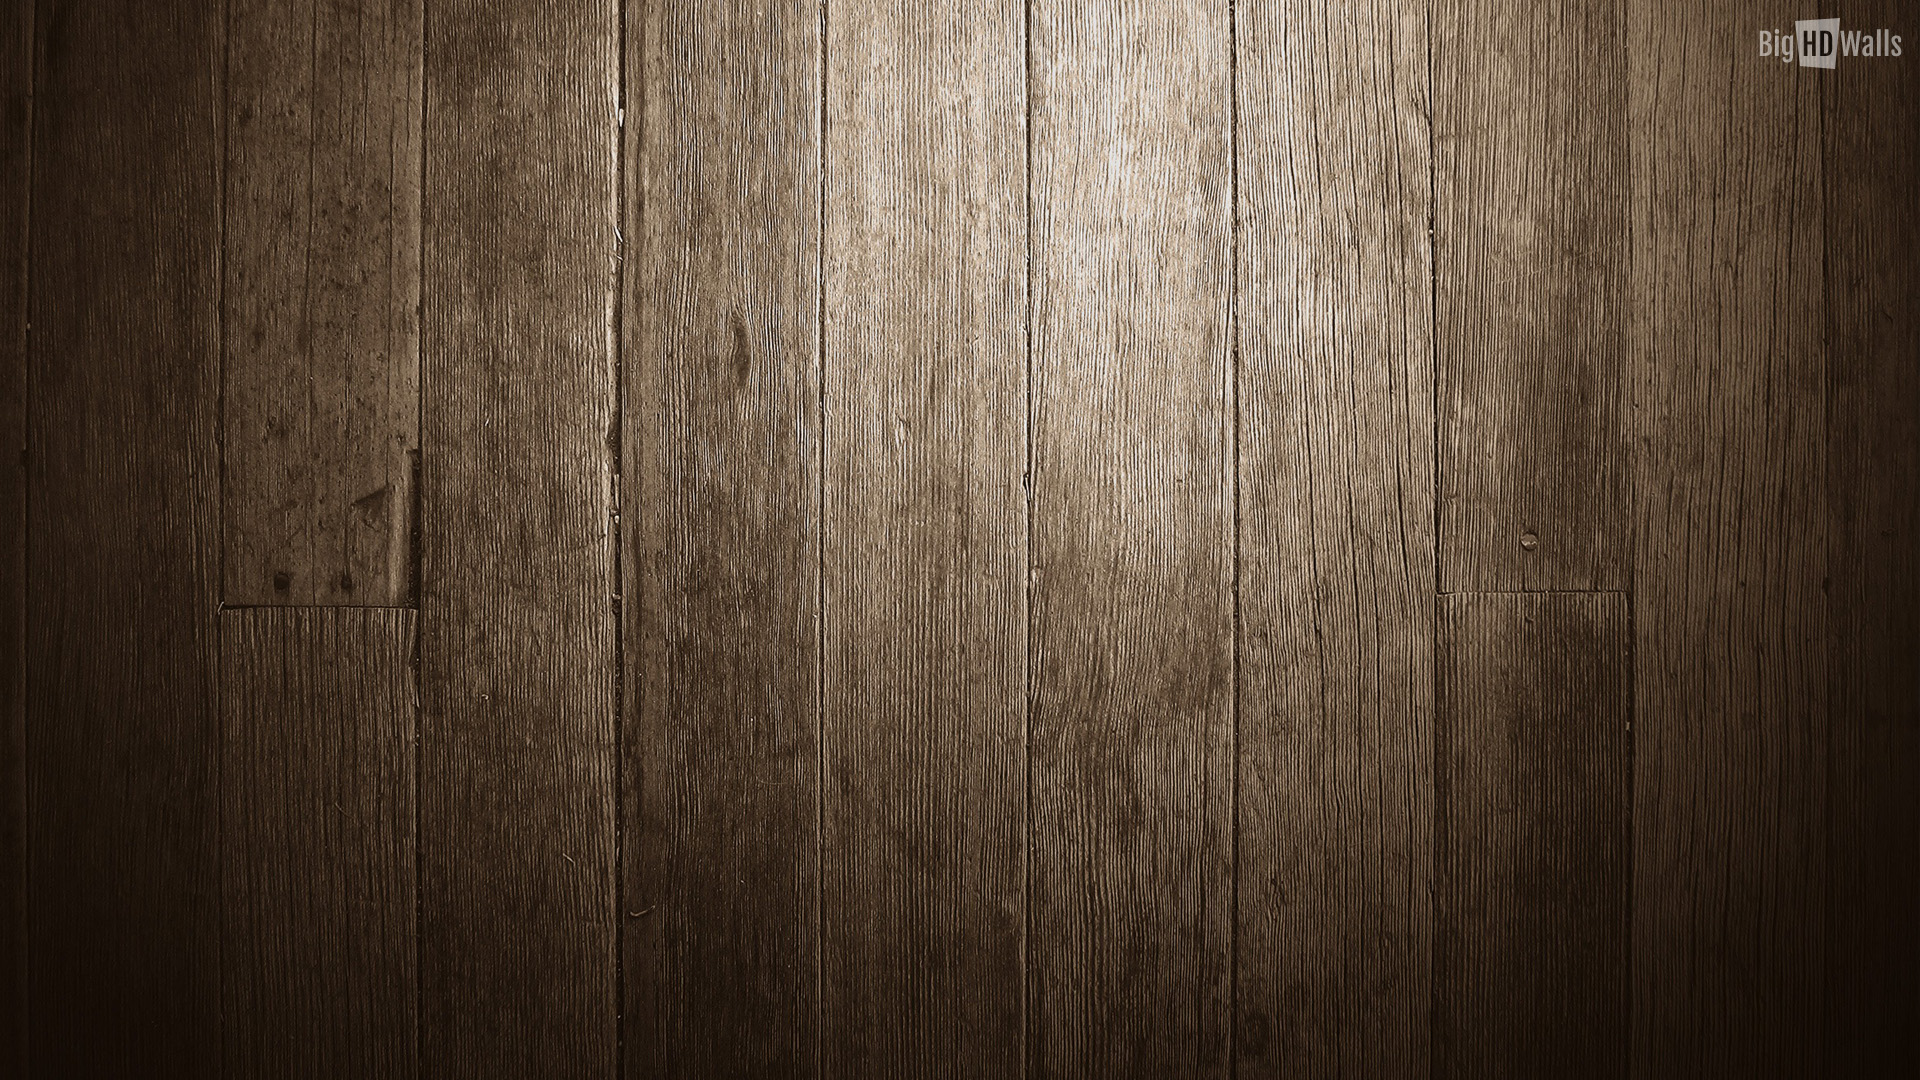 Download 1920x1080 clean black wall with wooden floor wallpaper